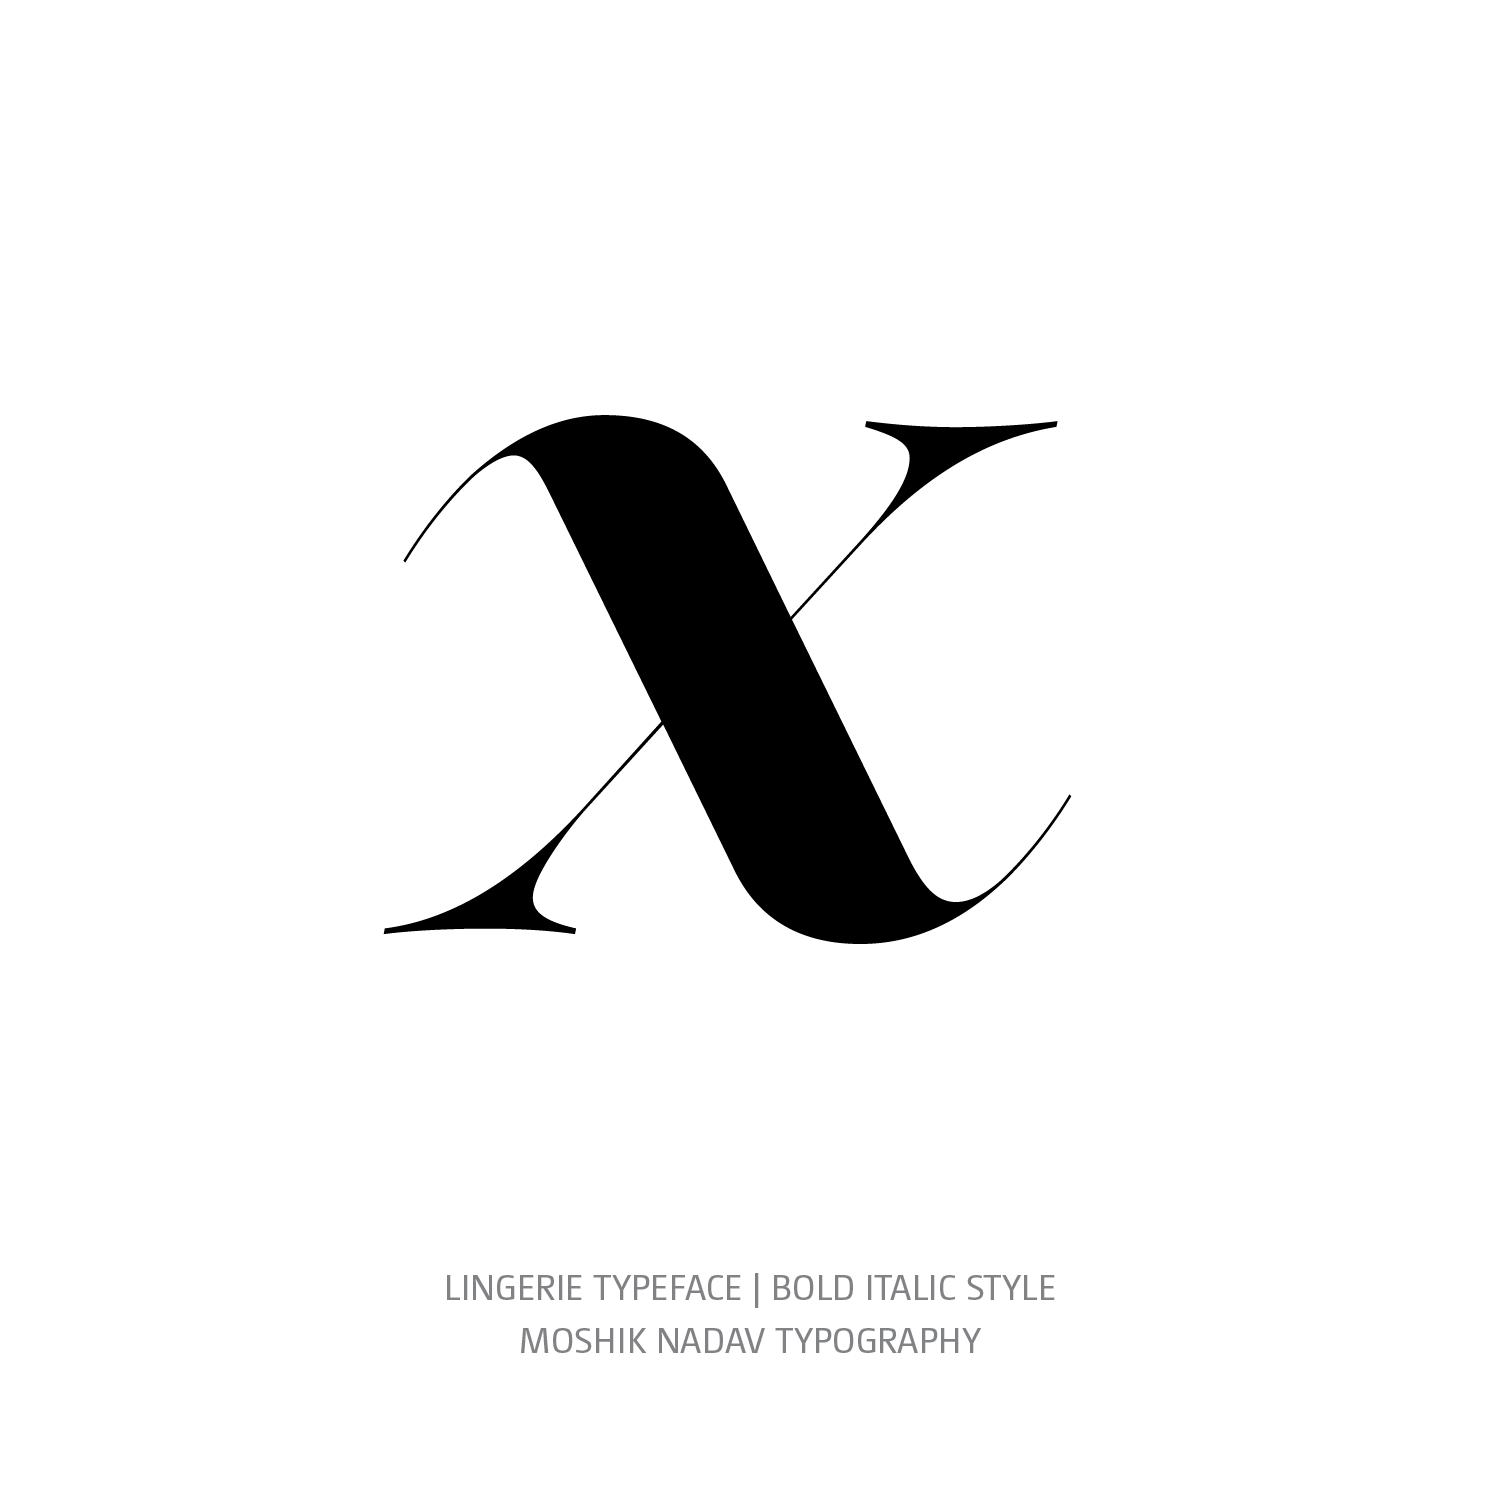 Lingerie Typeface Bold Italic x